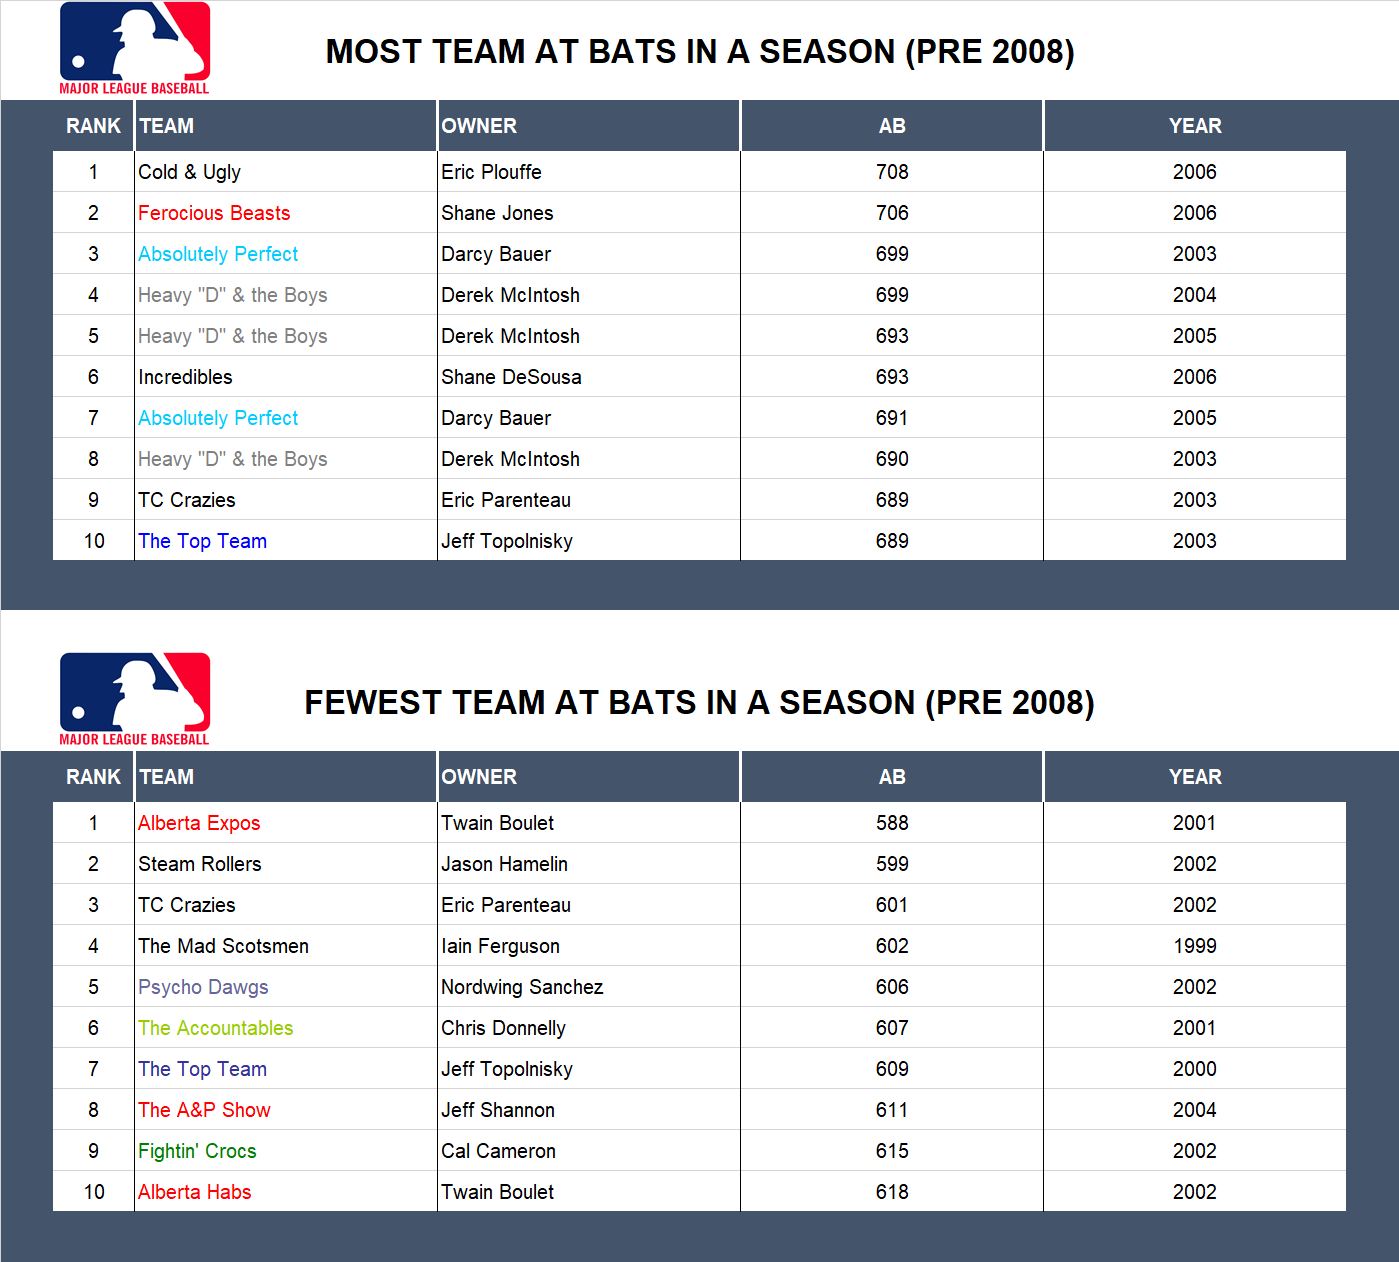 Major league Baseball Record At Bats (Pre 2008)